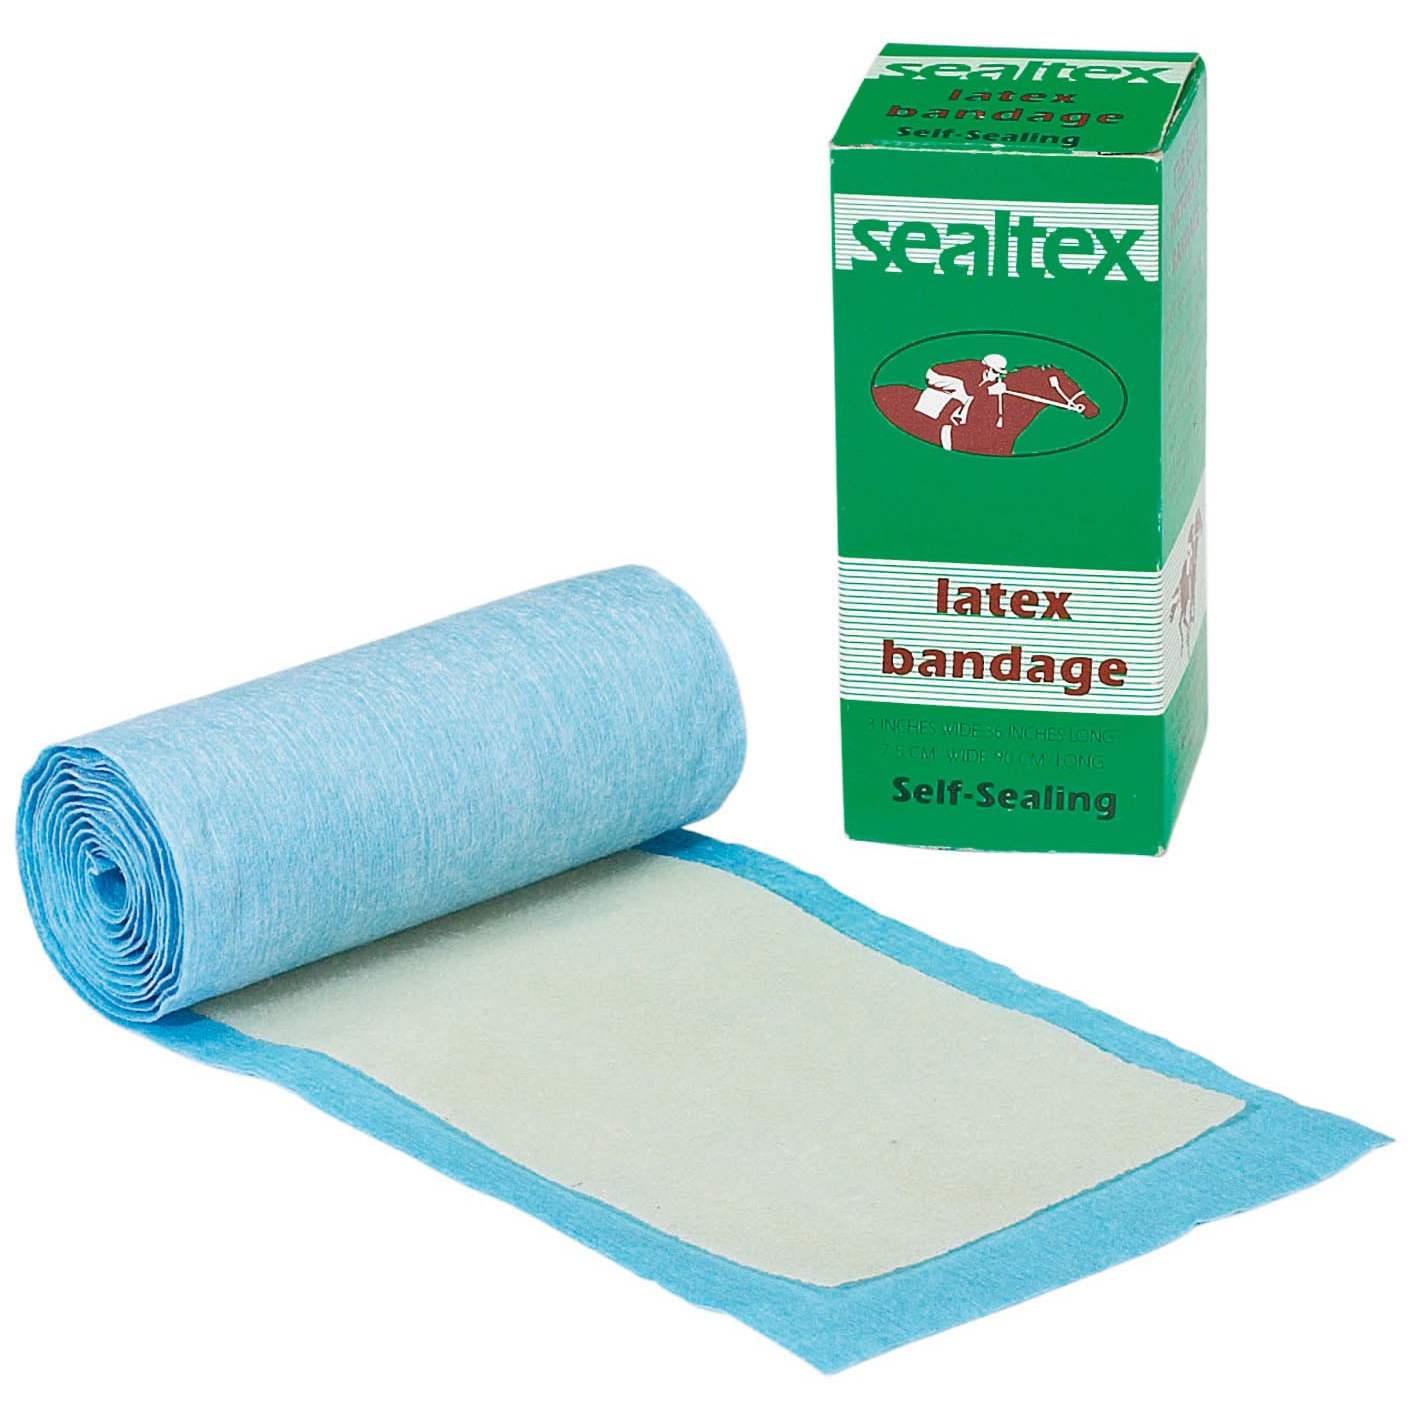 Laytex Bandage [Sealtex}